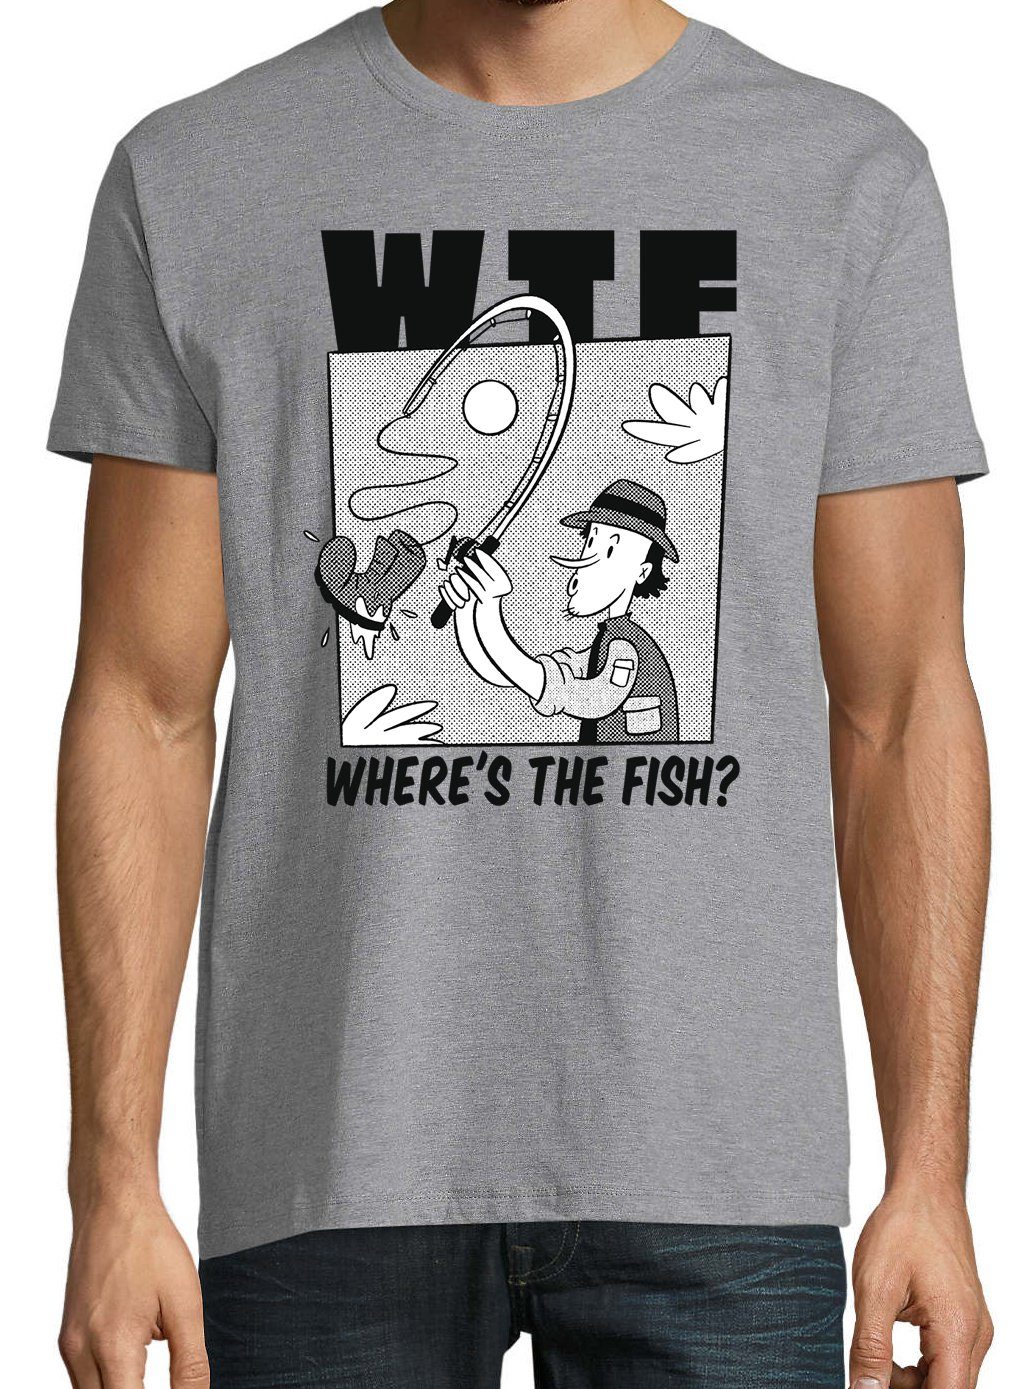 The Herren Shirt Frontprint Youth trendigem mit Grau Designz Where´s T-Shirt Fish?" "WTF